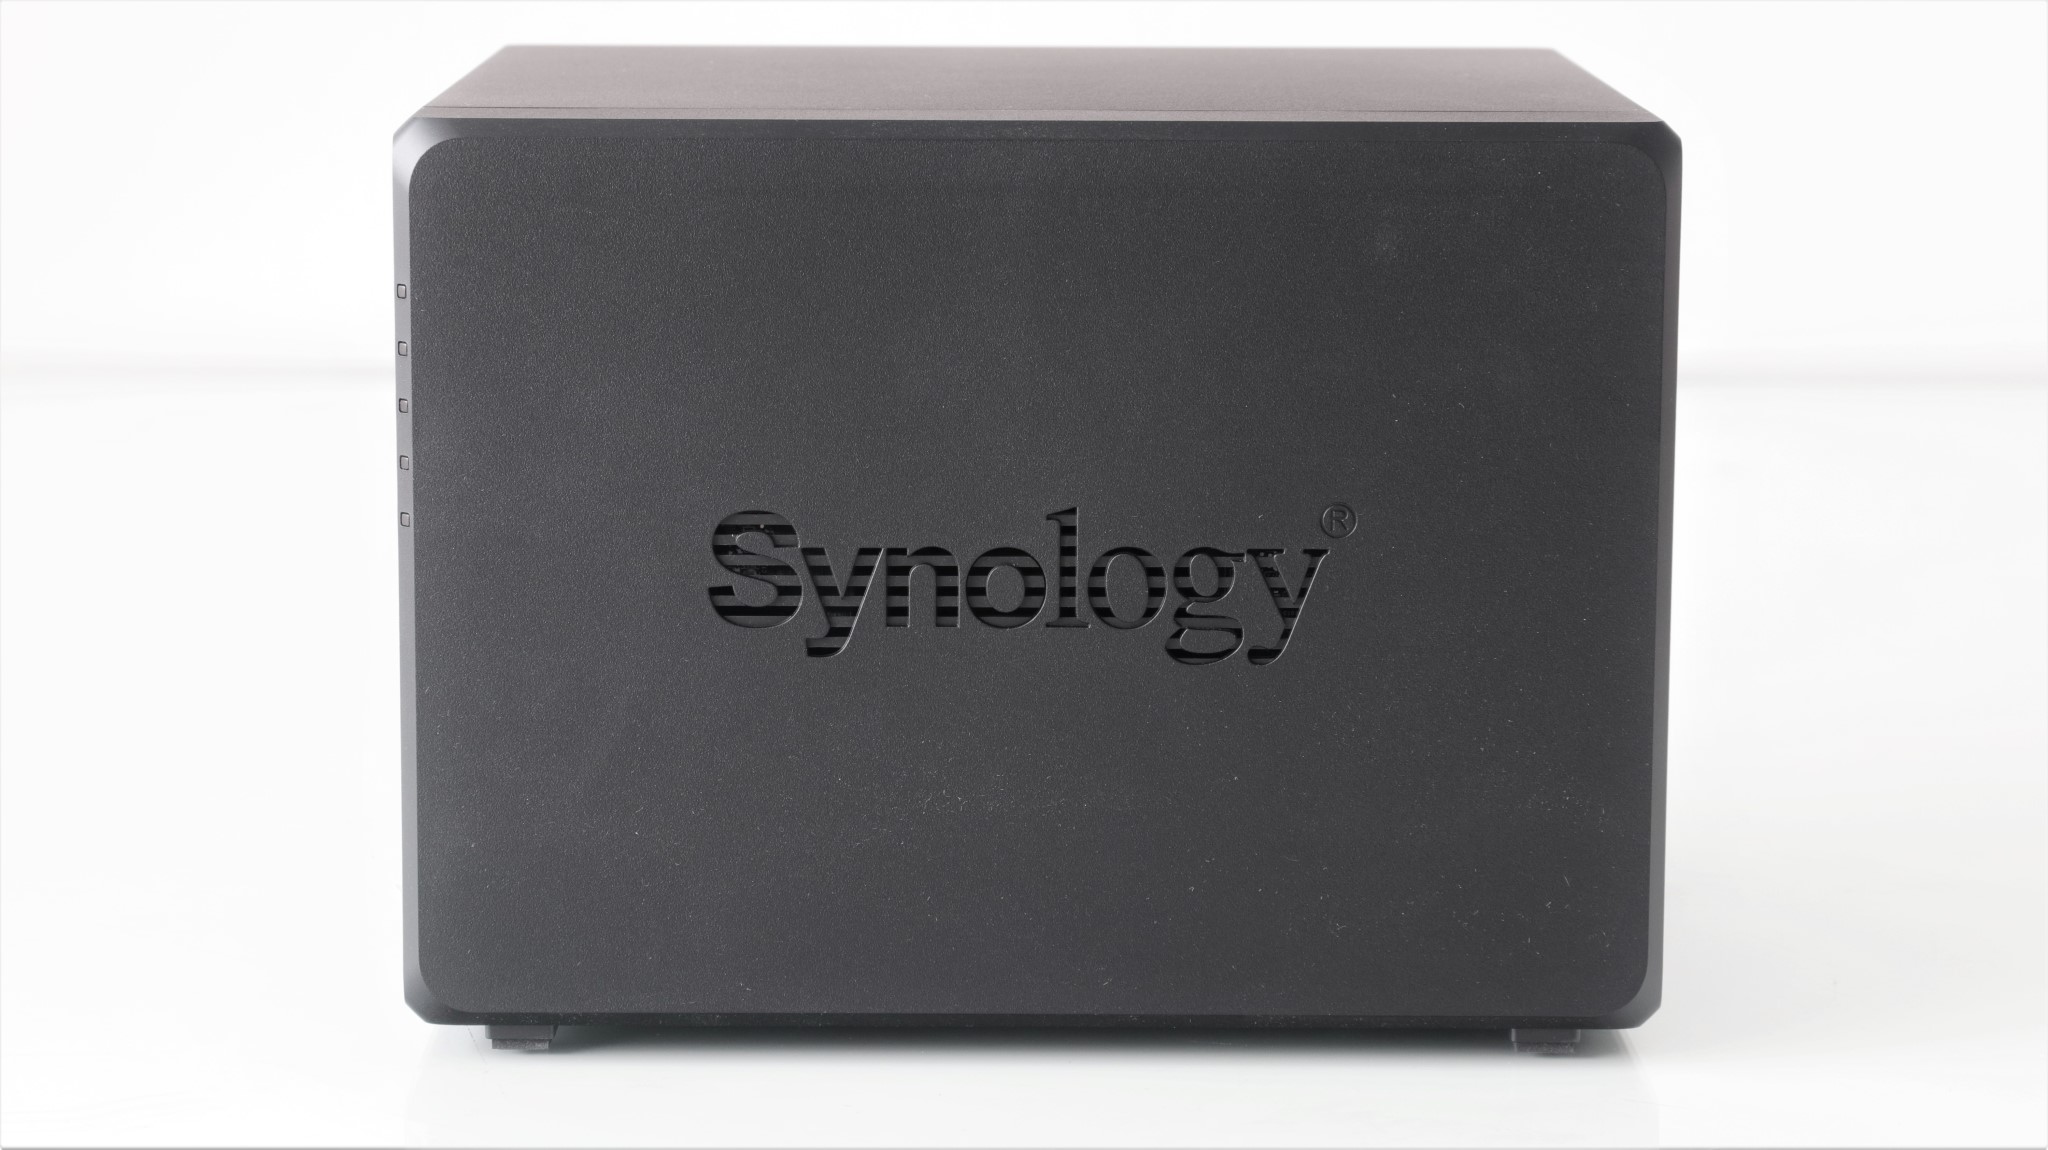 NAS Synology DiskStation DS920+